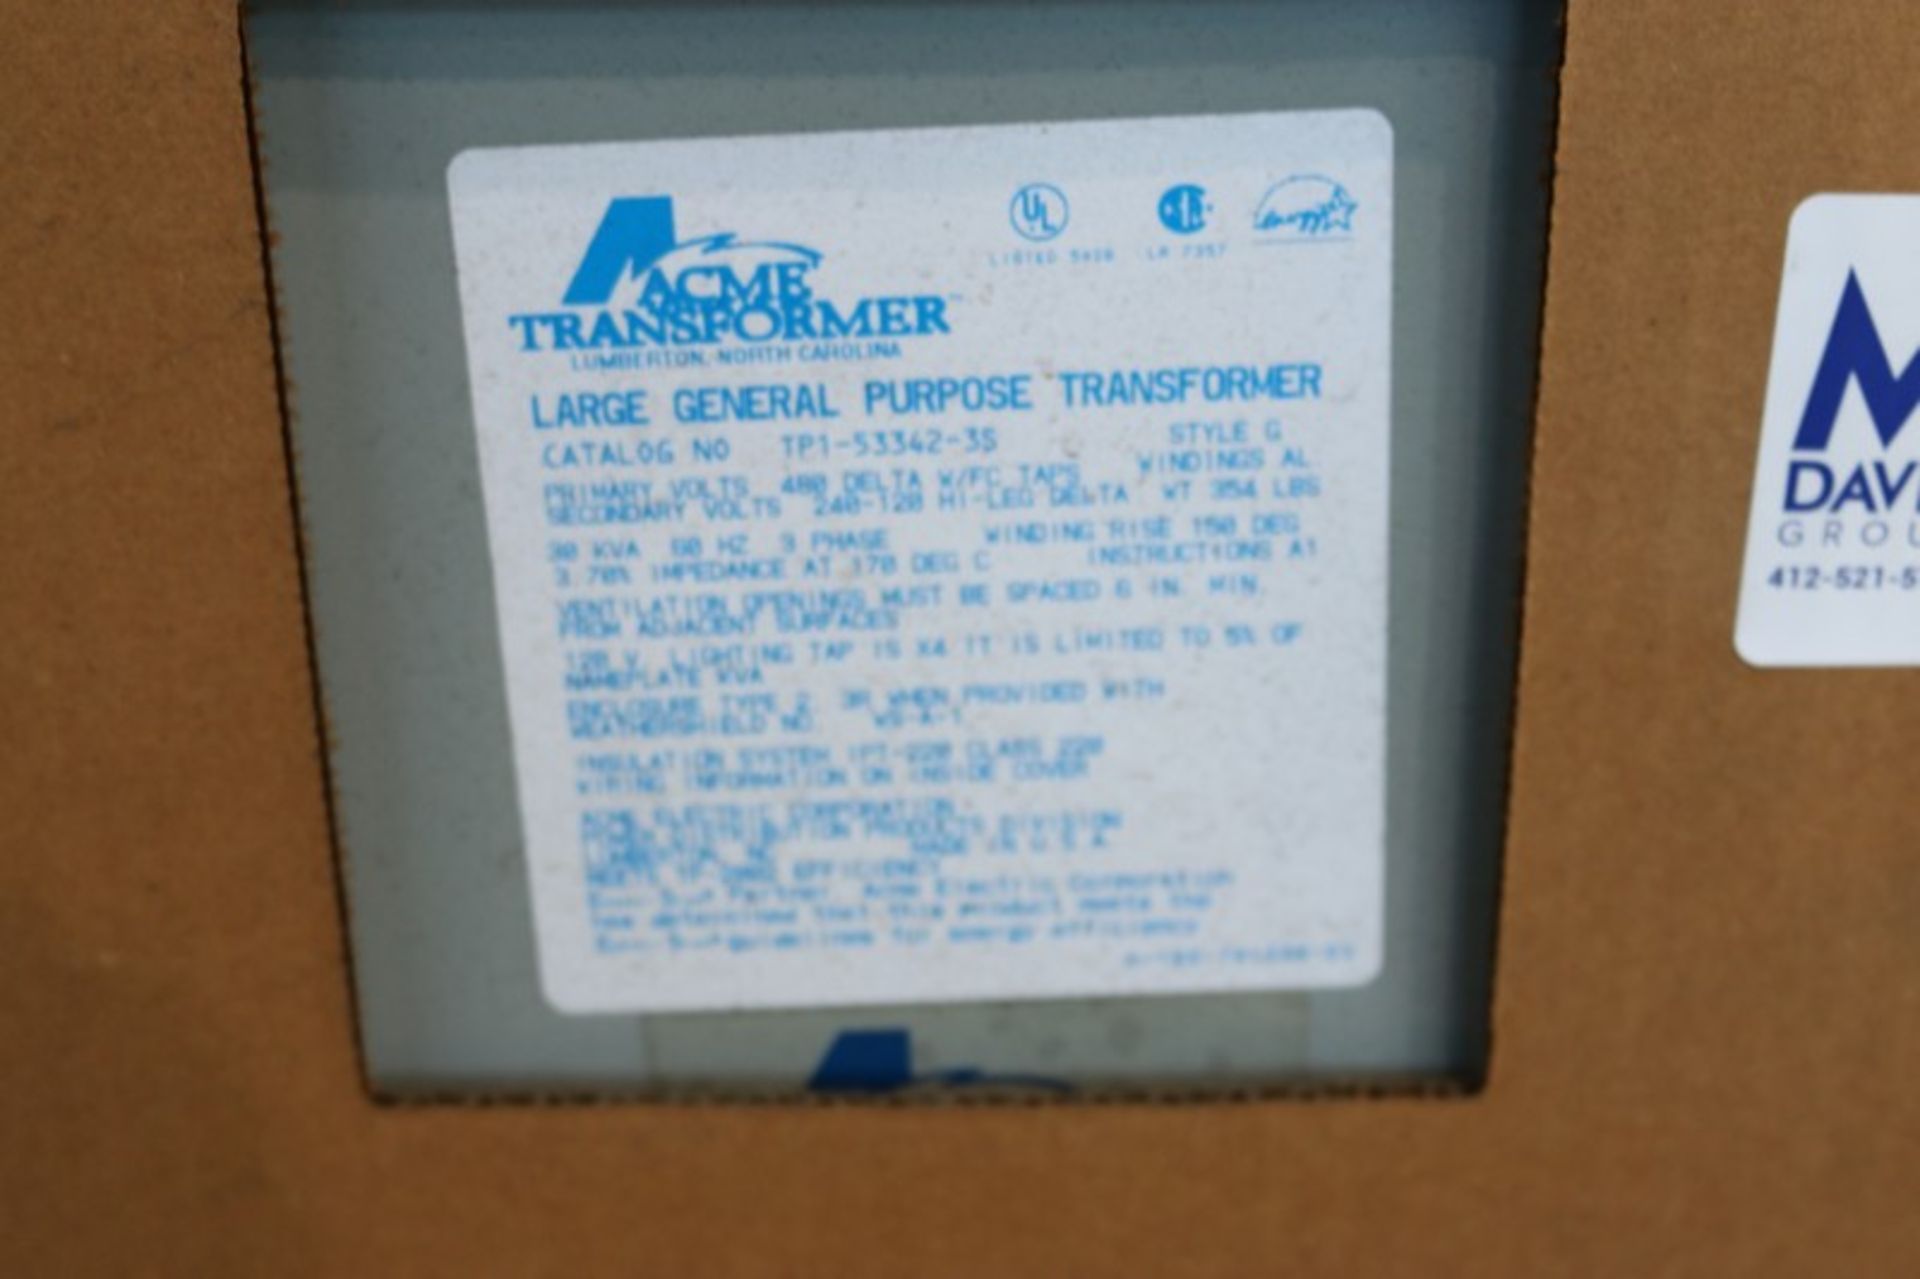 Acme Transformer, Cat. No. TP1-53342-35, 480 DELTA, 3 Phase(INV#82296)(Located @ the MDG Auction - Bild 4 aus 5